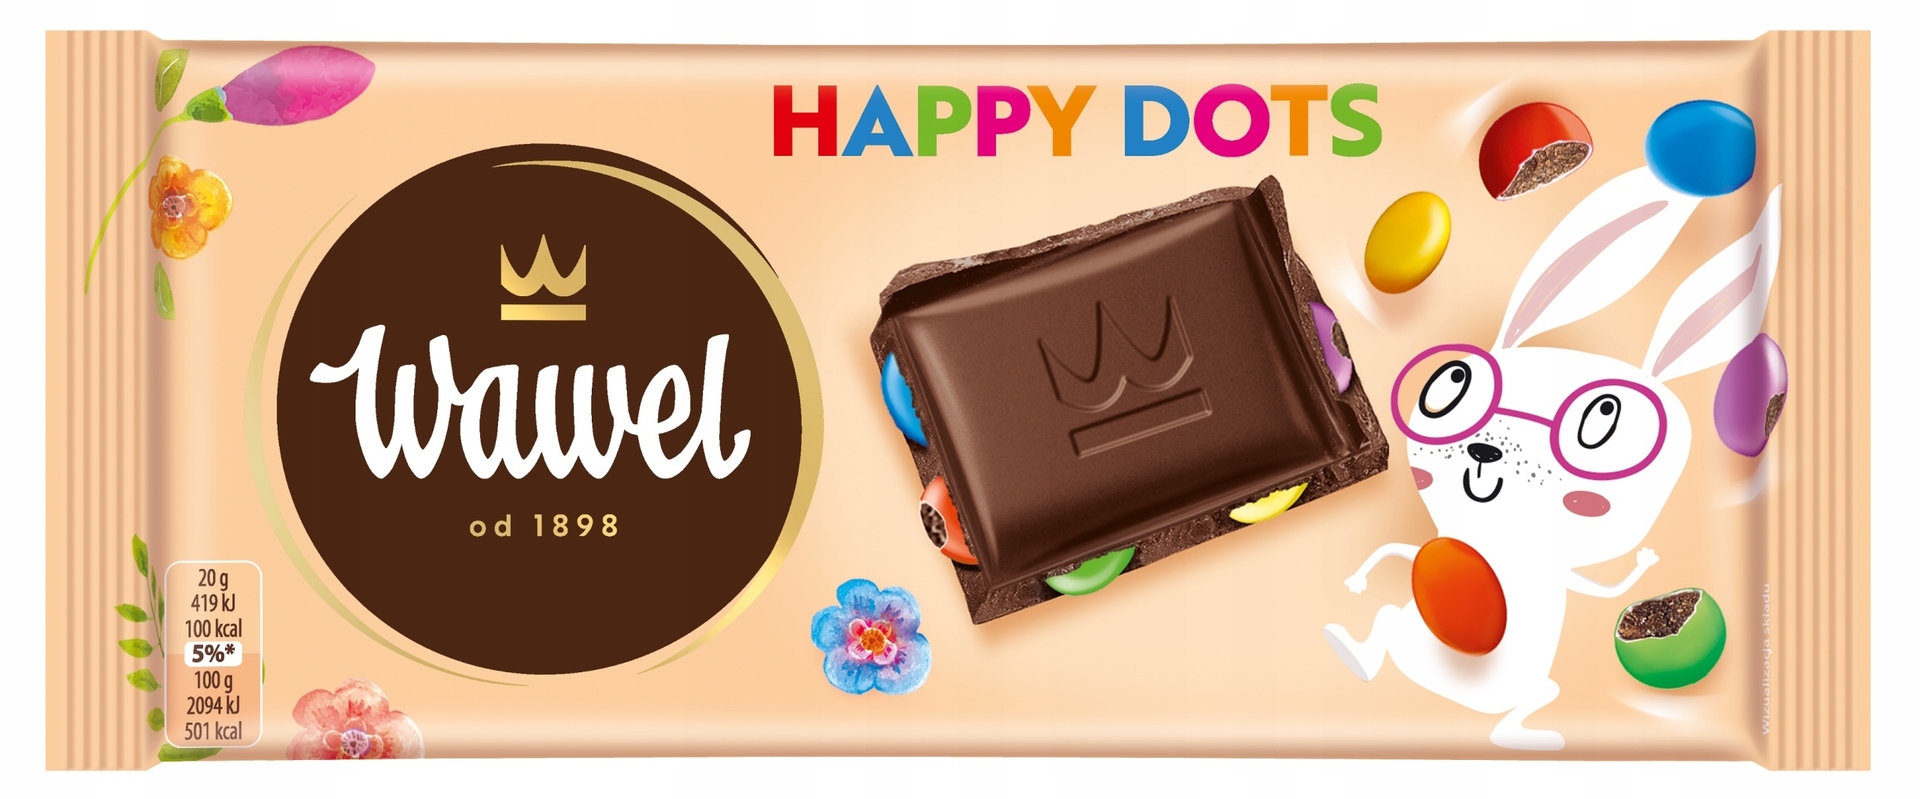 Wawel Horká čokoláda Happy Dots s lentilkami 90g